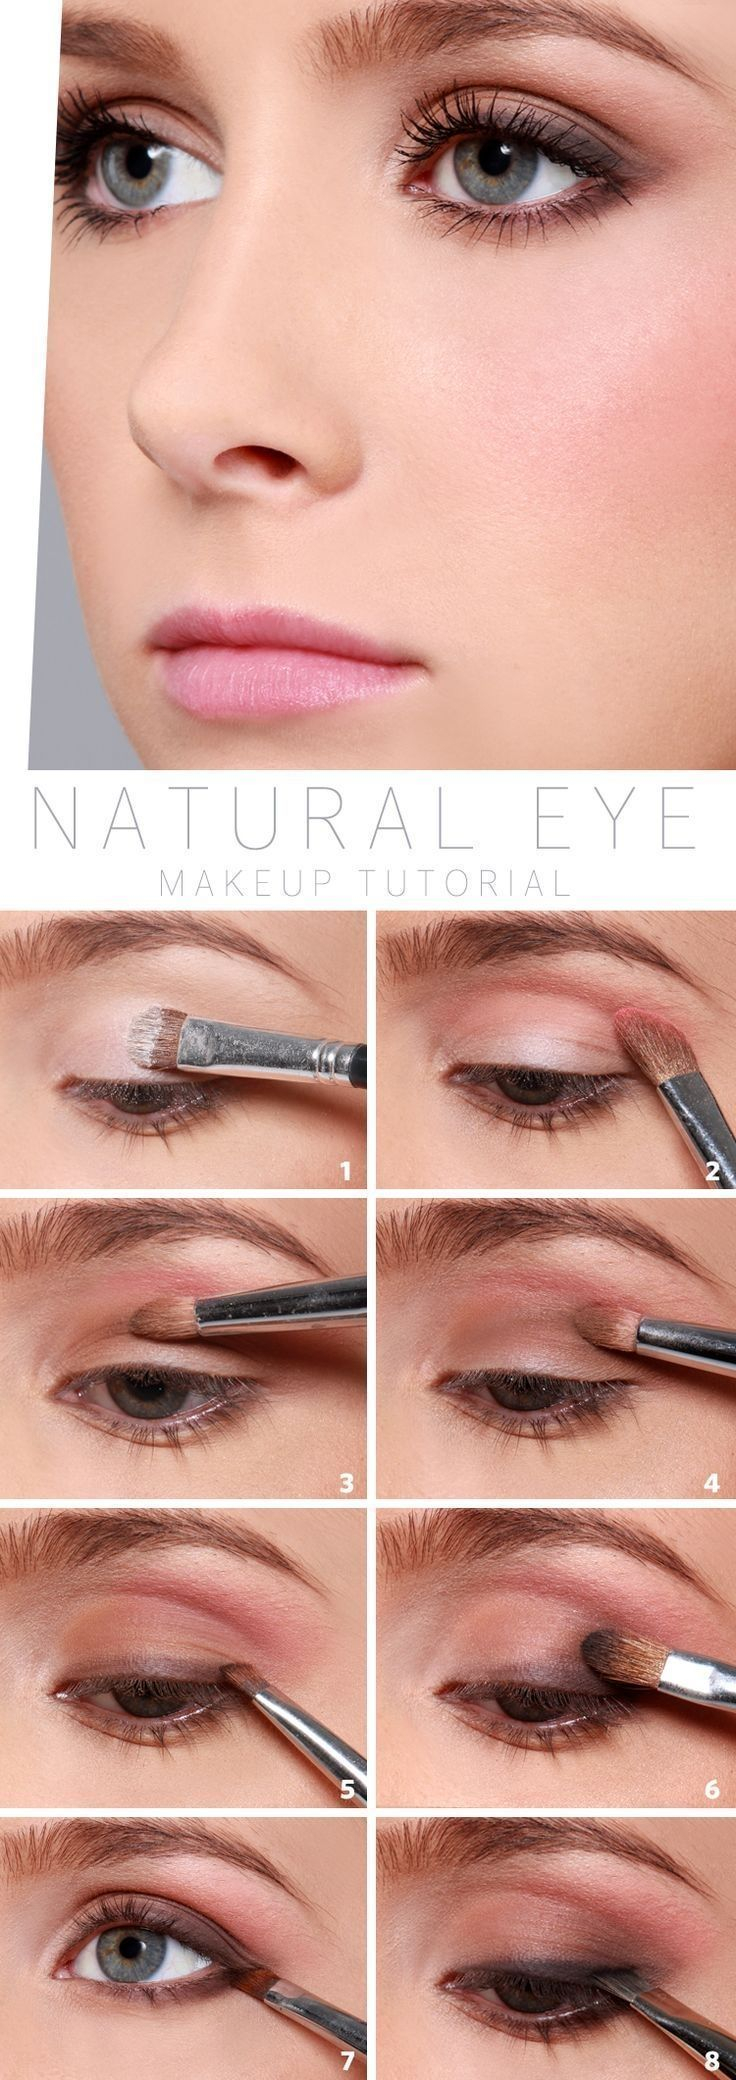 How To Do Natural Eye Makeup Eye Makeup How To Do Natural Eyes Work Makeup Tips Makeup